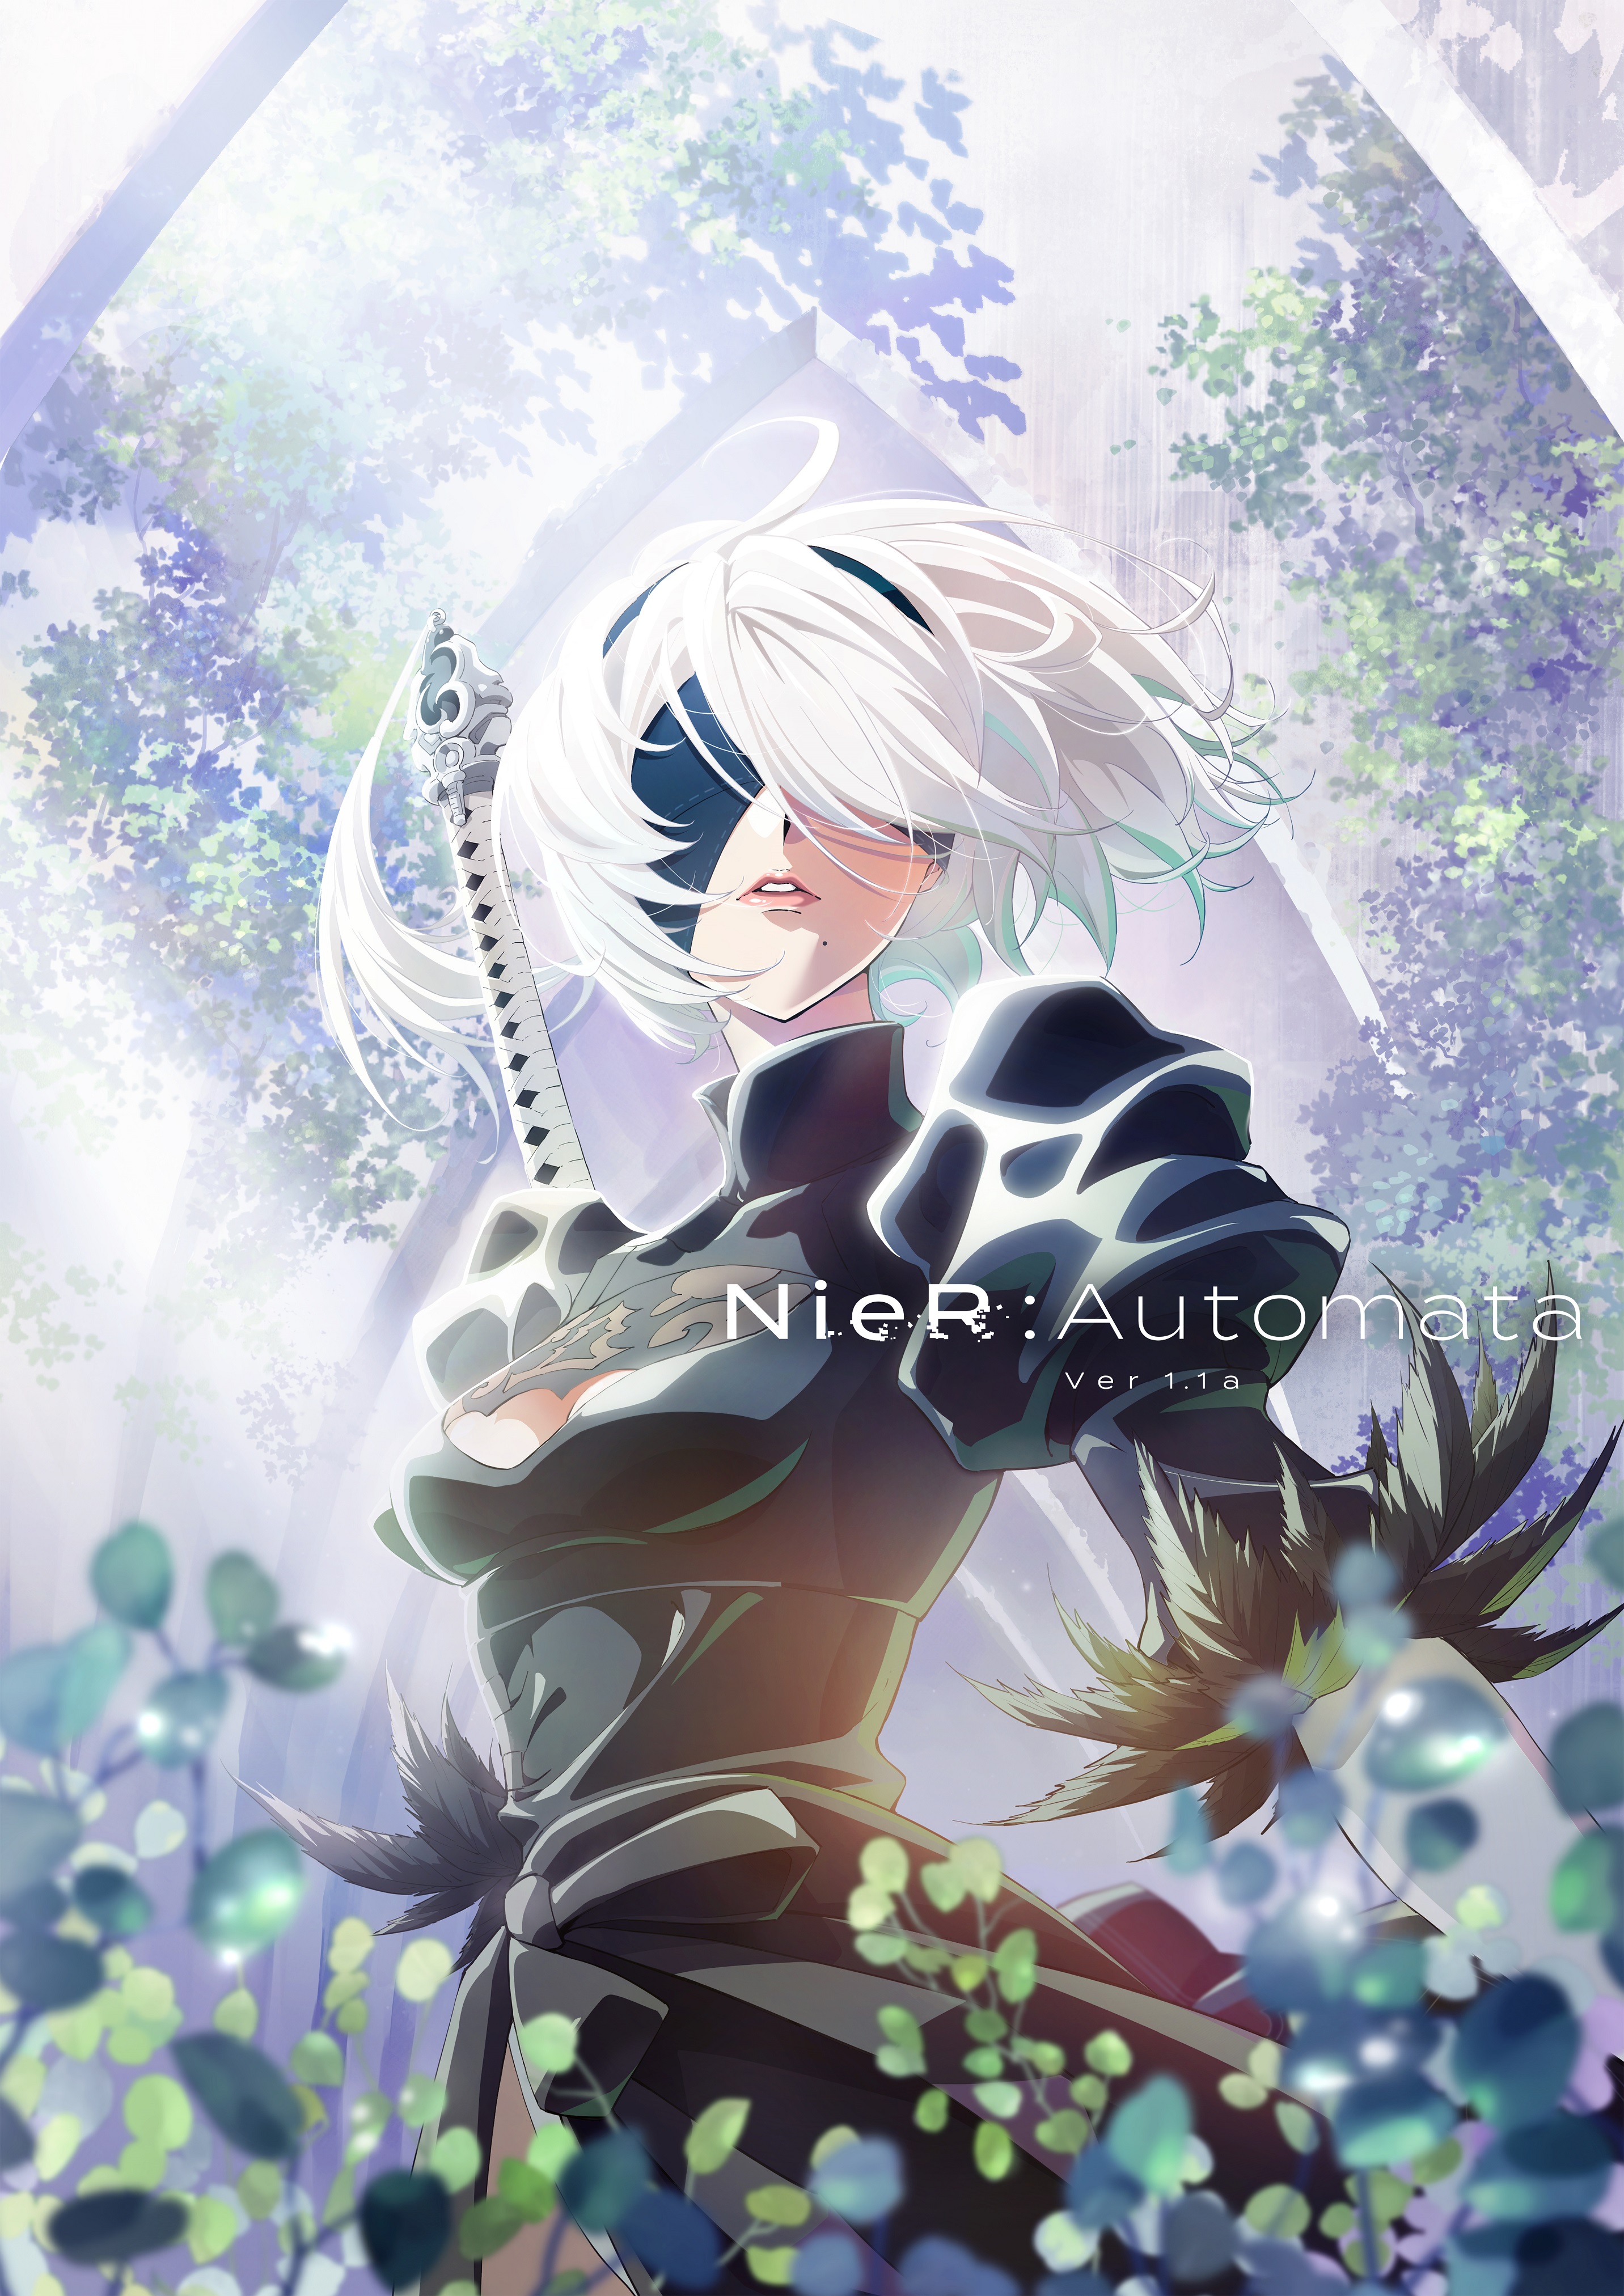 NieR Automata Anime Will Be Streaming on Crunchyroll